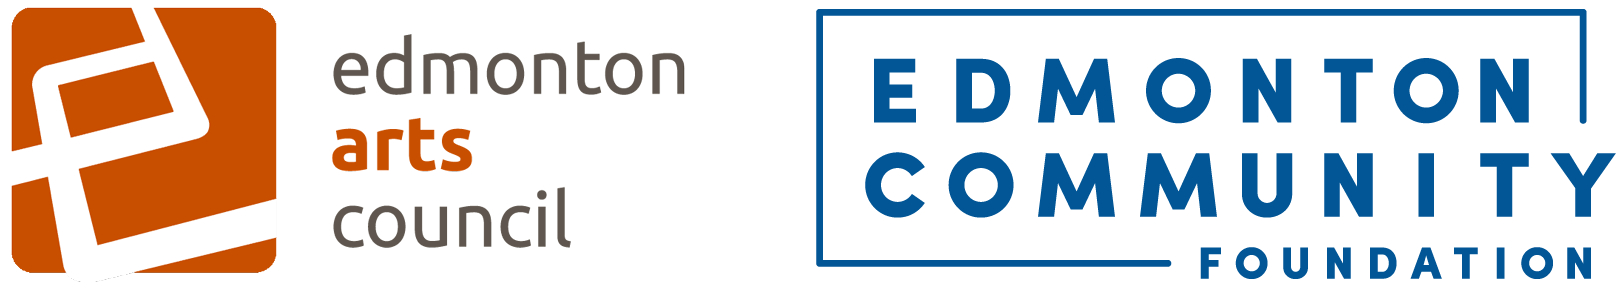 Edmonton Arts Council and Edmonton Community Foundation